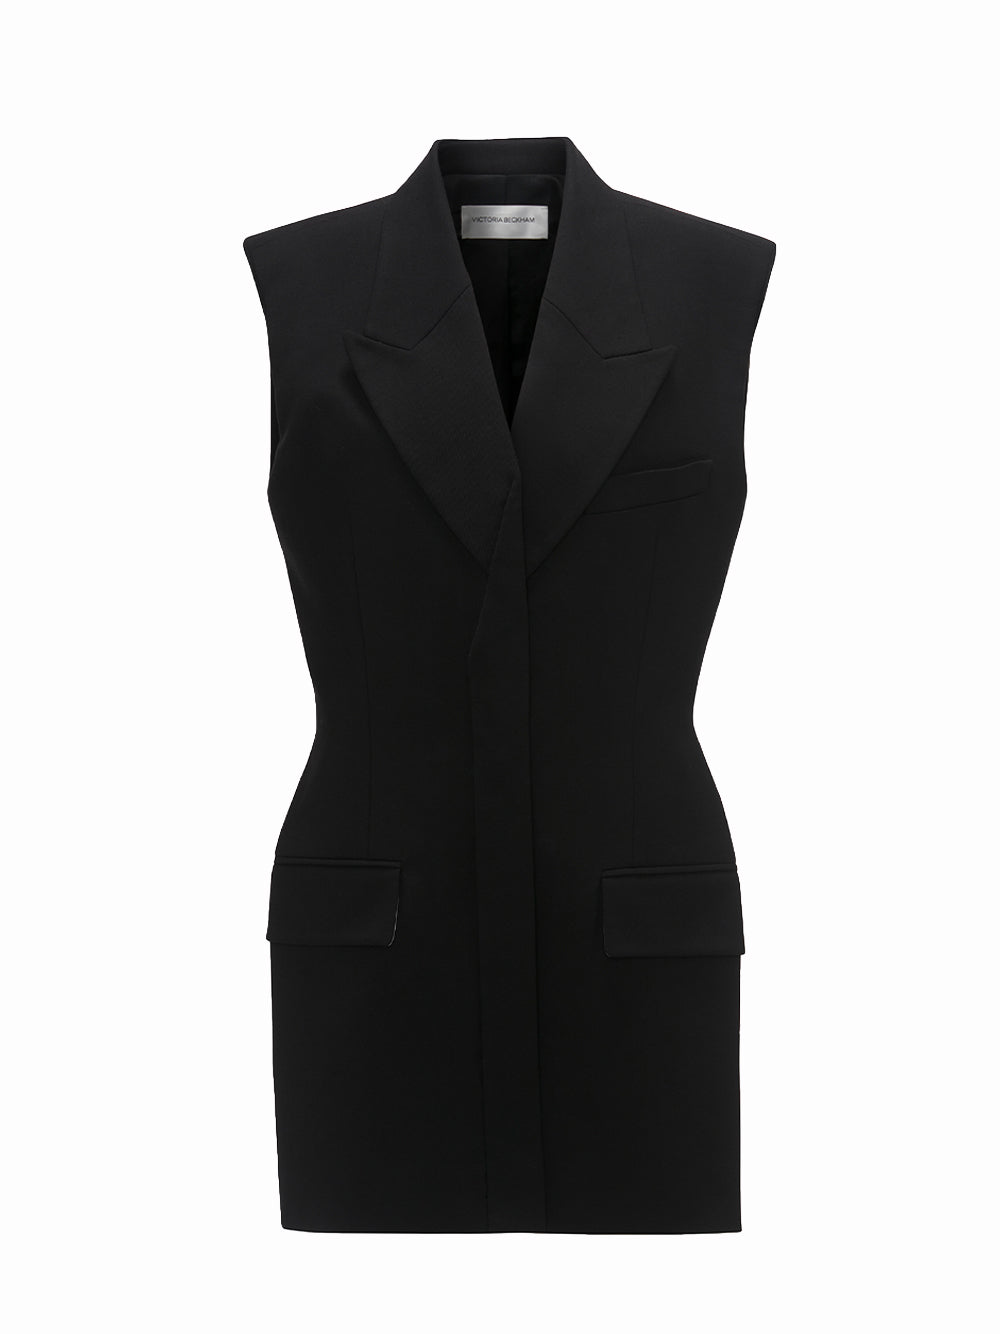 Sleeveless Tailored Dress (Black)